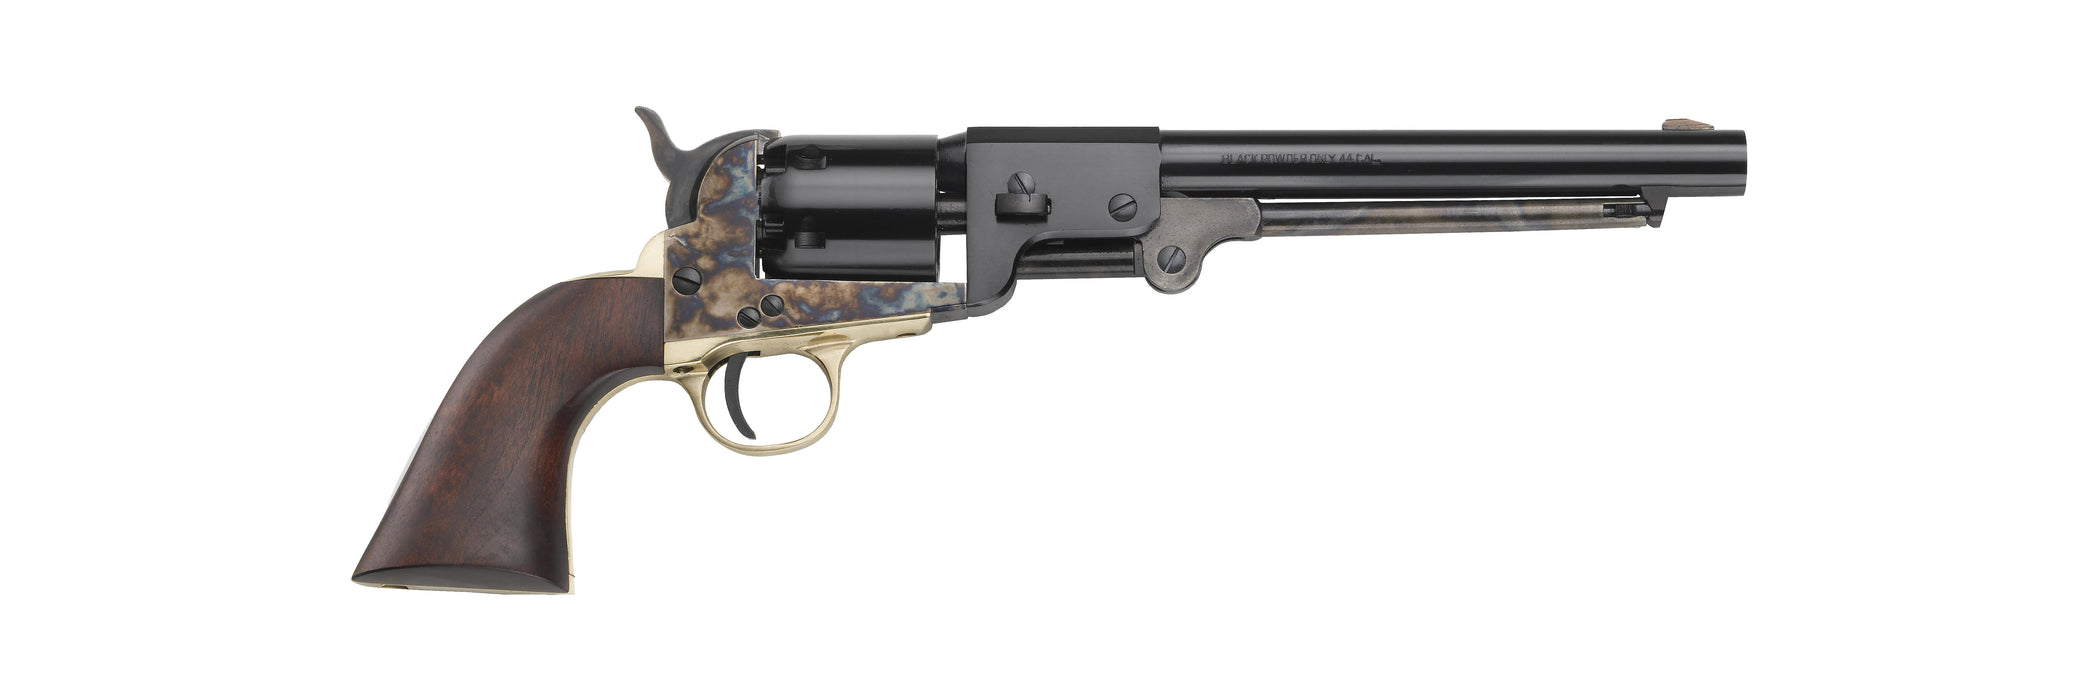 Pietta™ 1862 Dance Black Powder Revolver Pistol - .44 Caliber - 8 Inch Barrel - Walnut Grip - DAN44